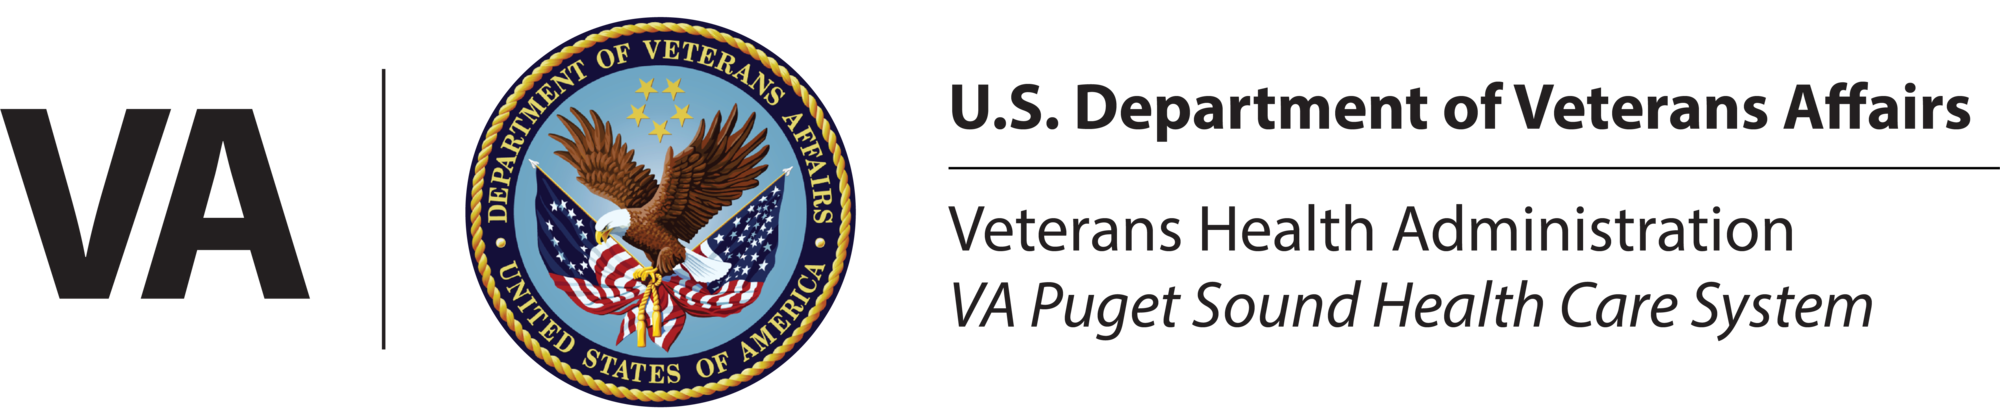 VA Puget Sound logo